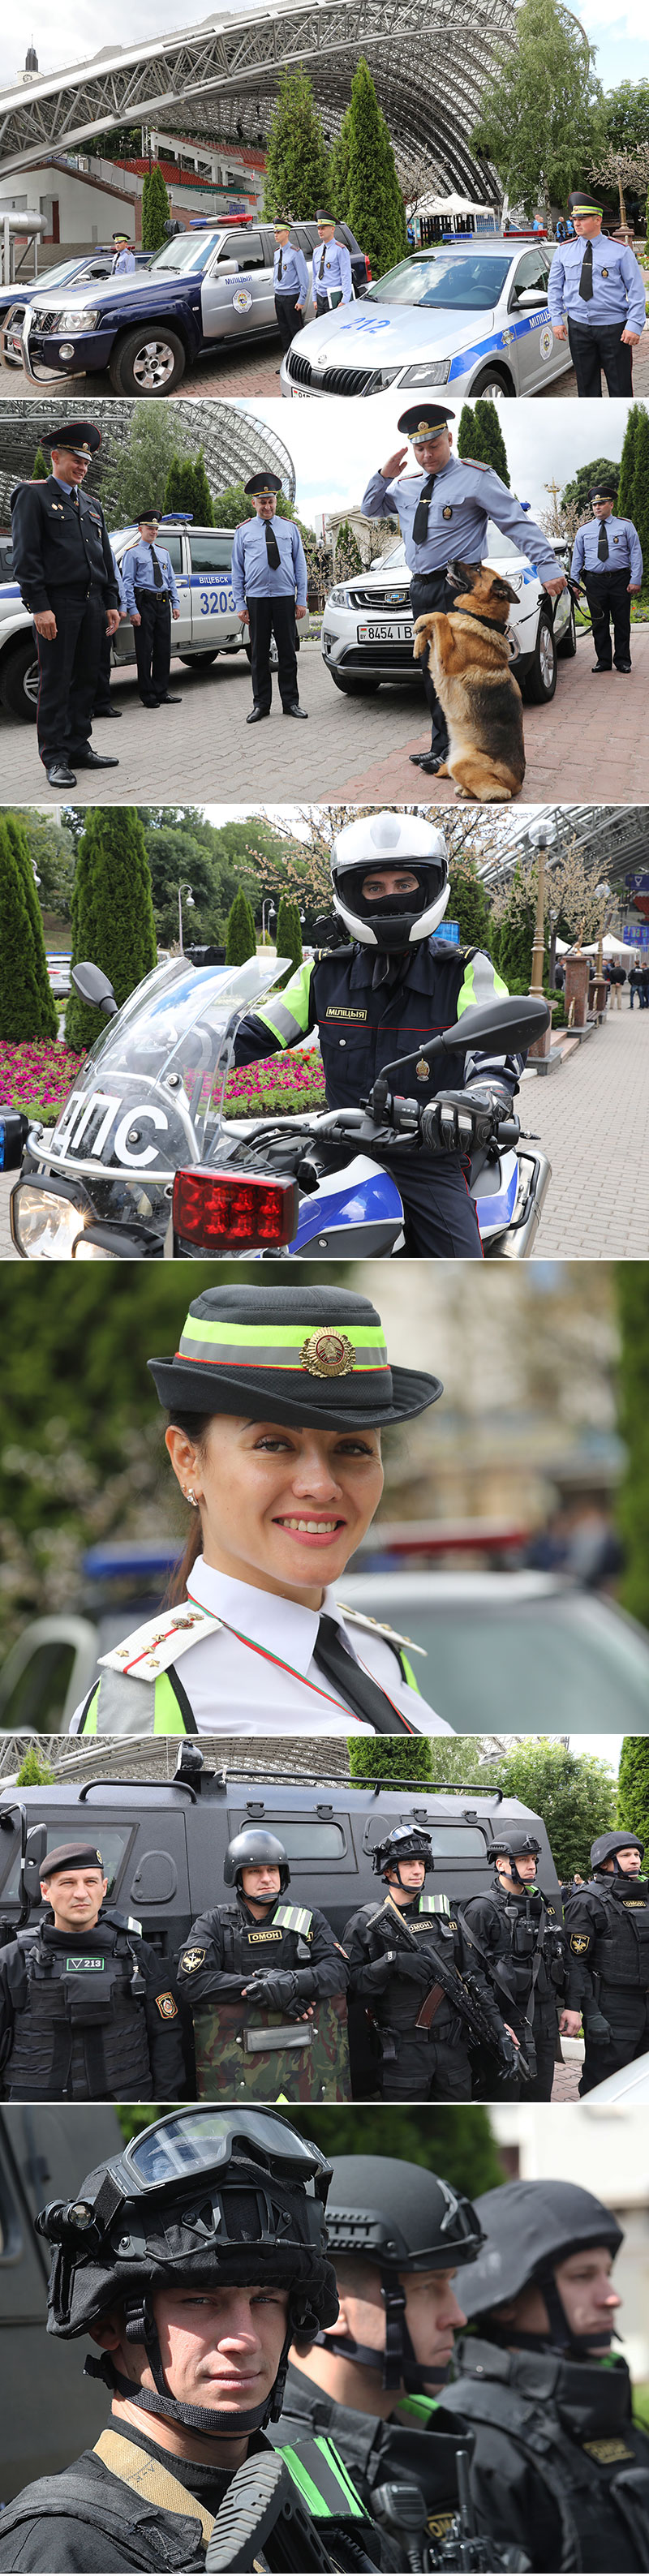 Vitebsk police step up security during the Slavianski Bazaar festival